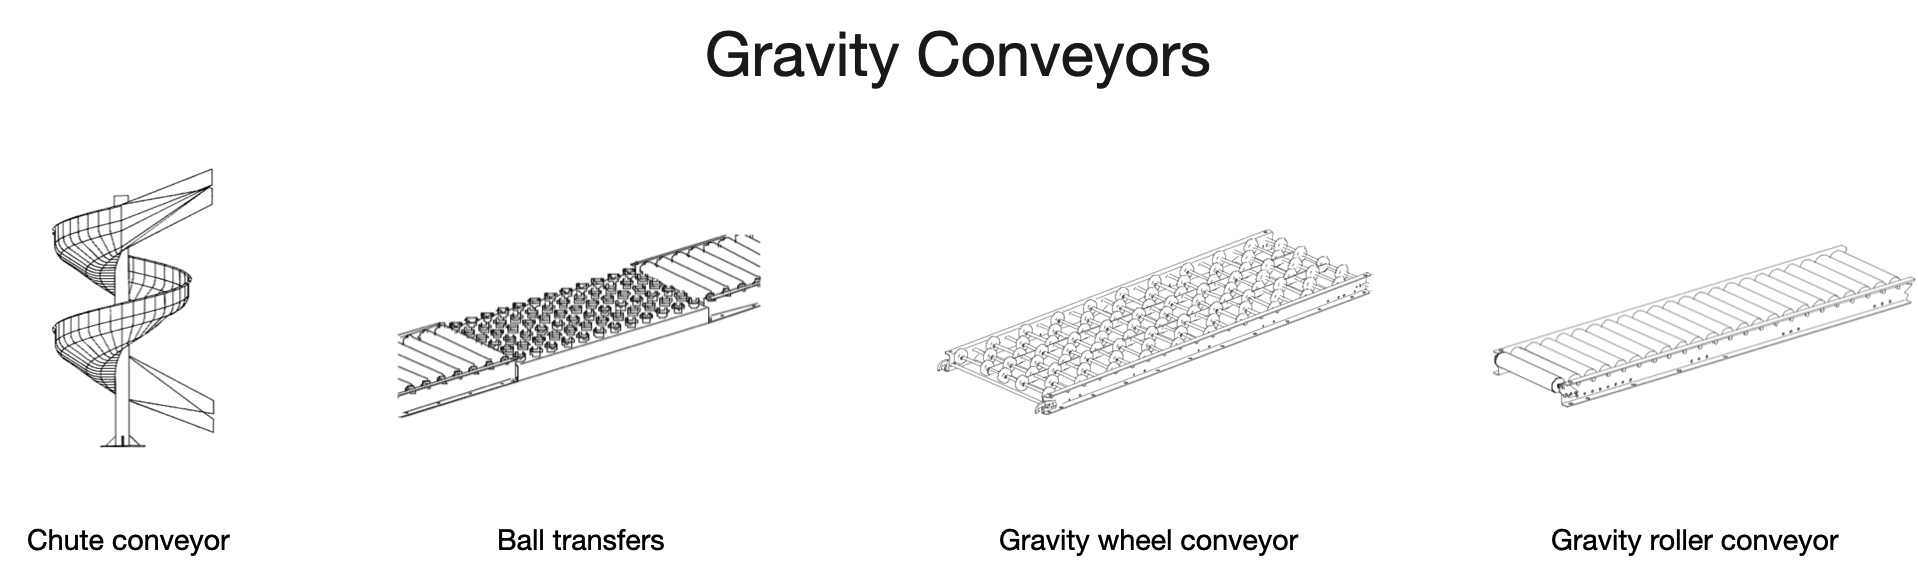 gravity_conveyors